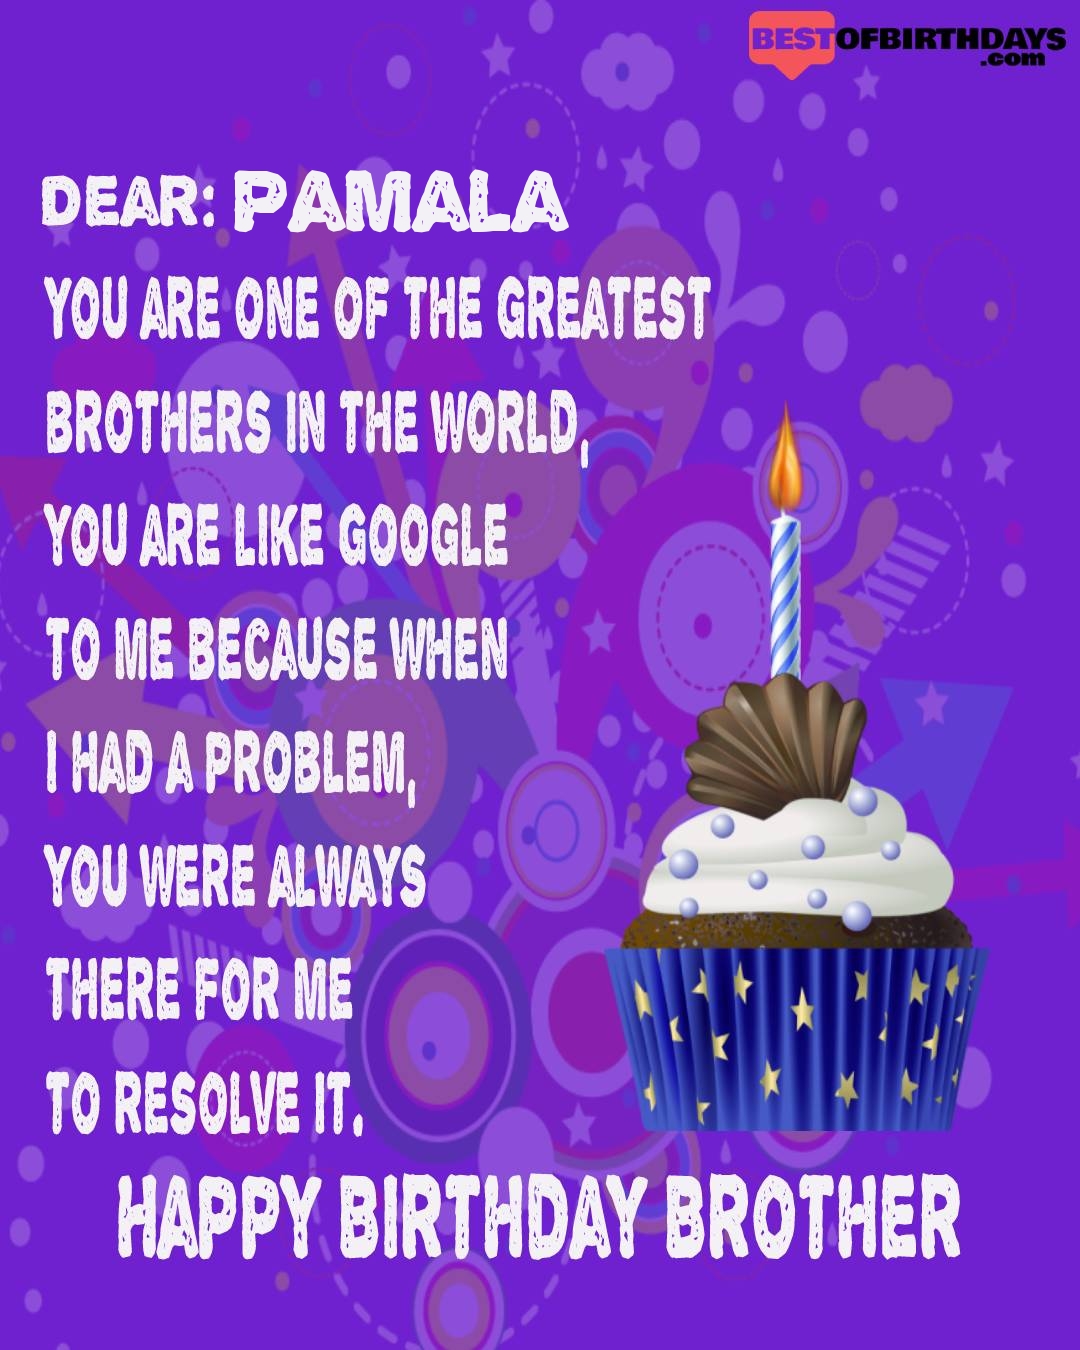 Happy birthday pamala bhai brother bro